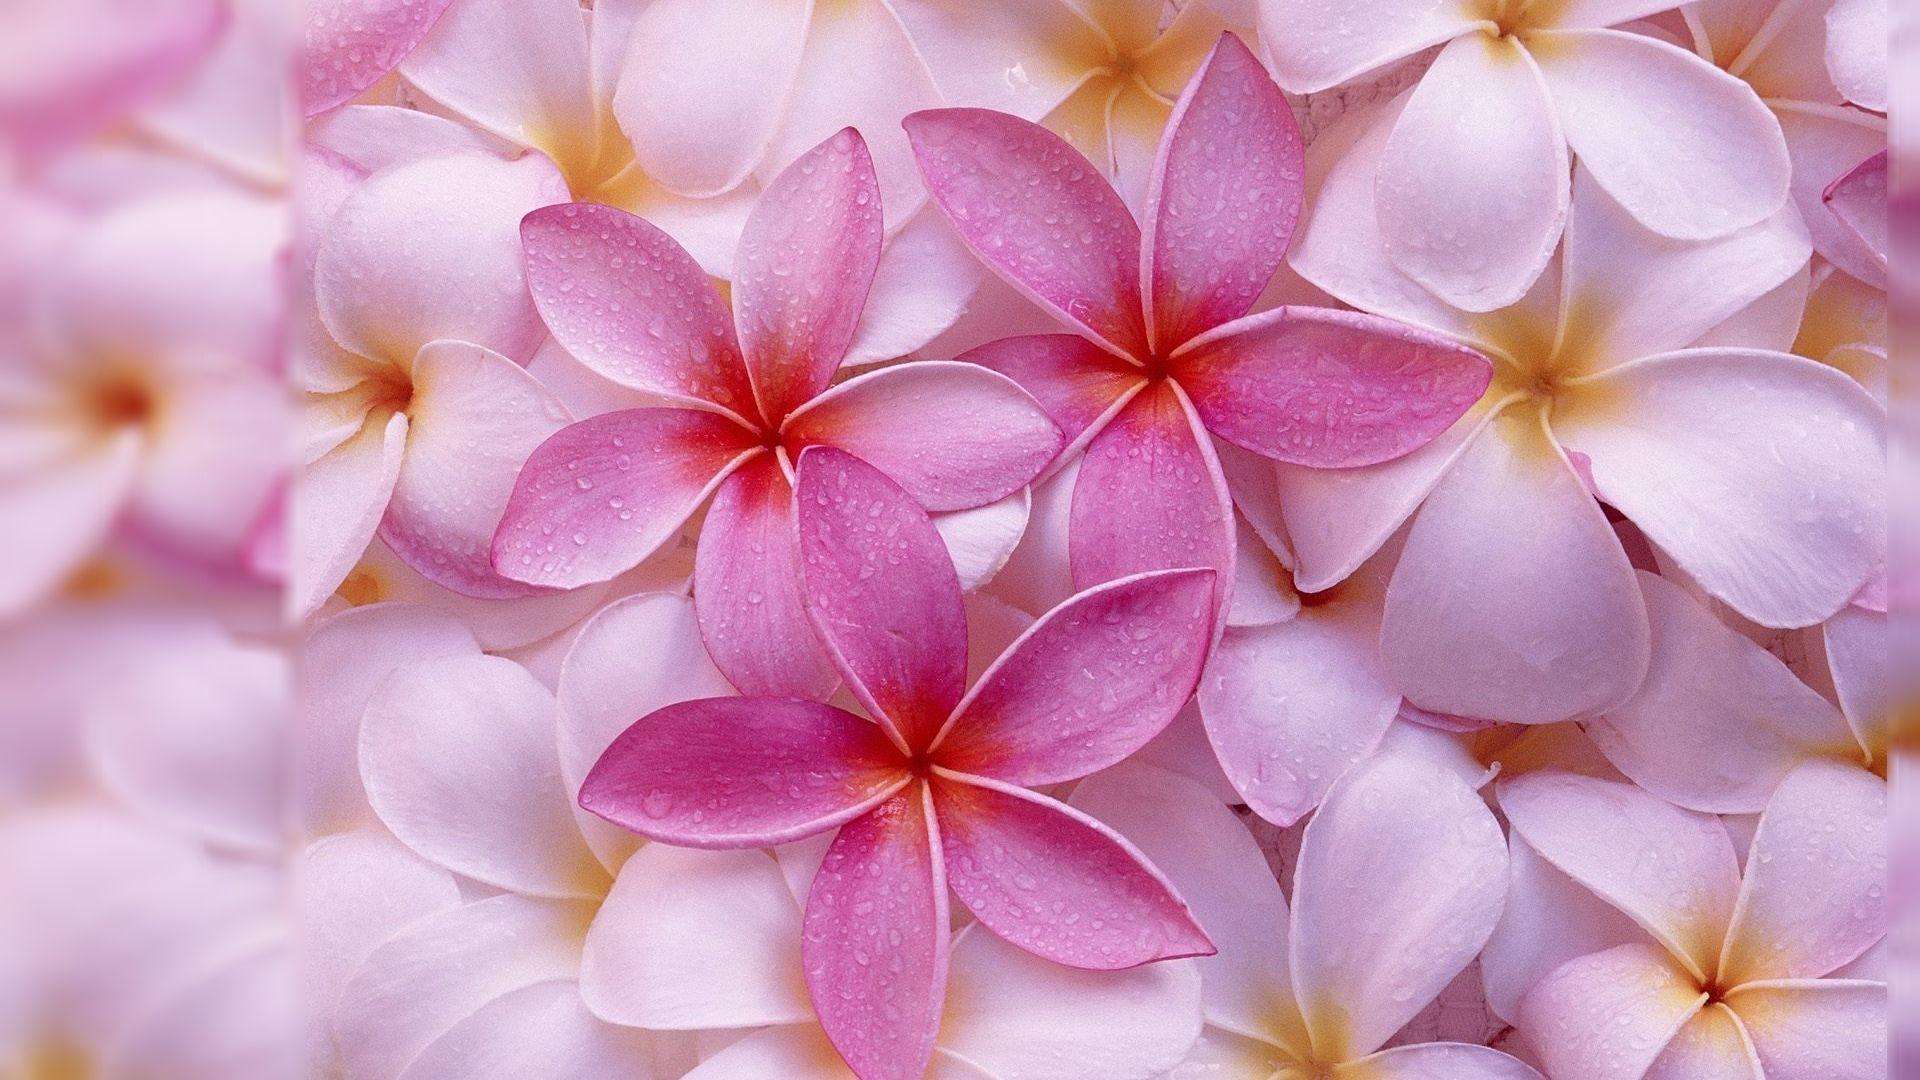 Most Beautiful Flowers Wallpapers For Desktop - Wallpaper Cave